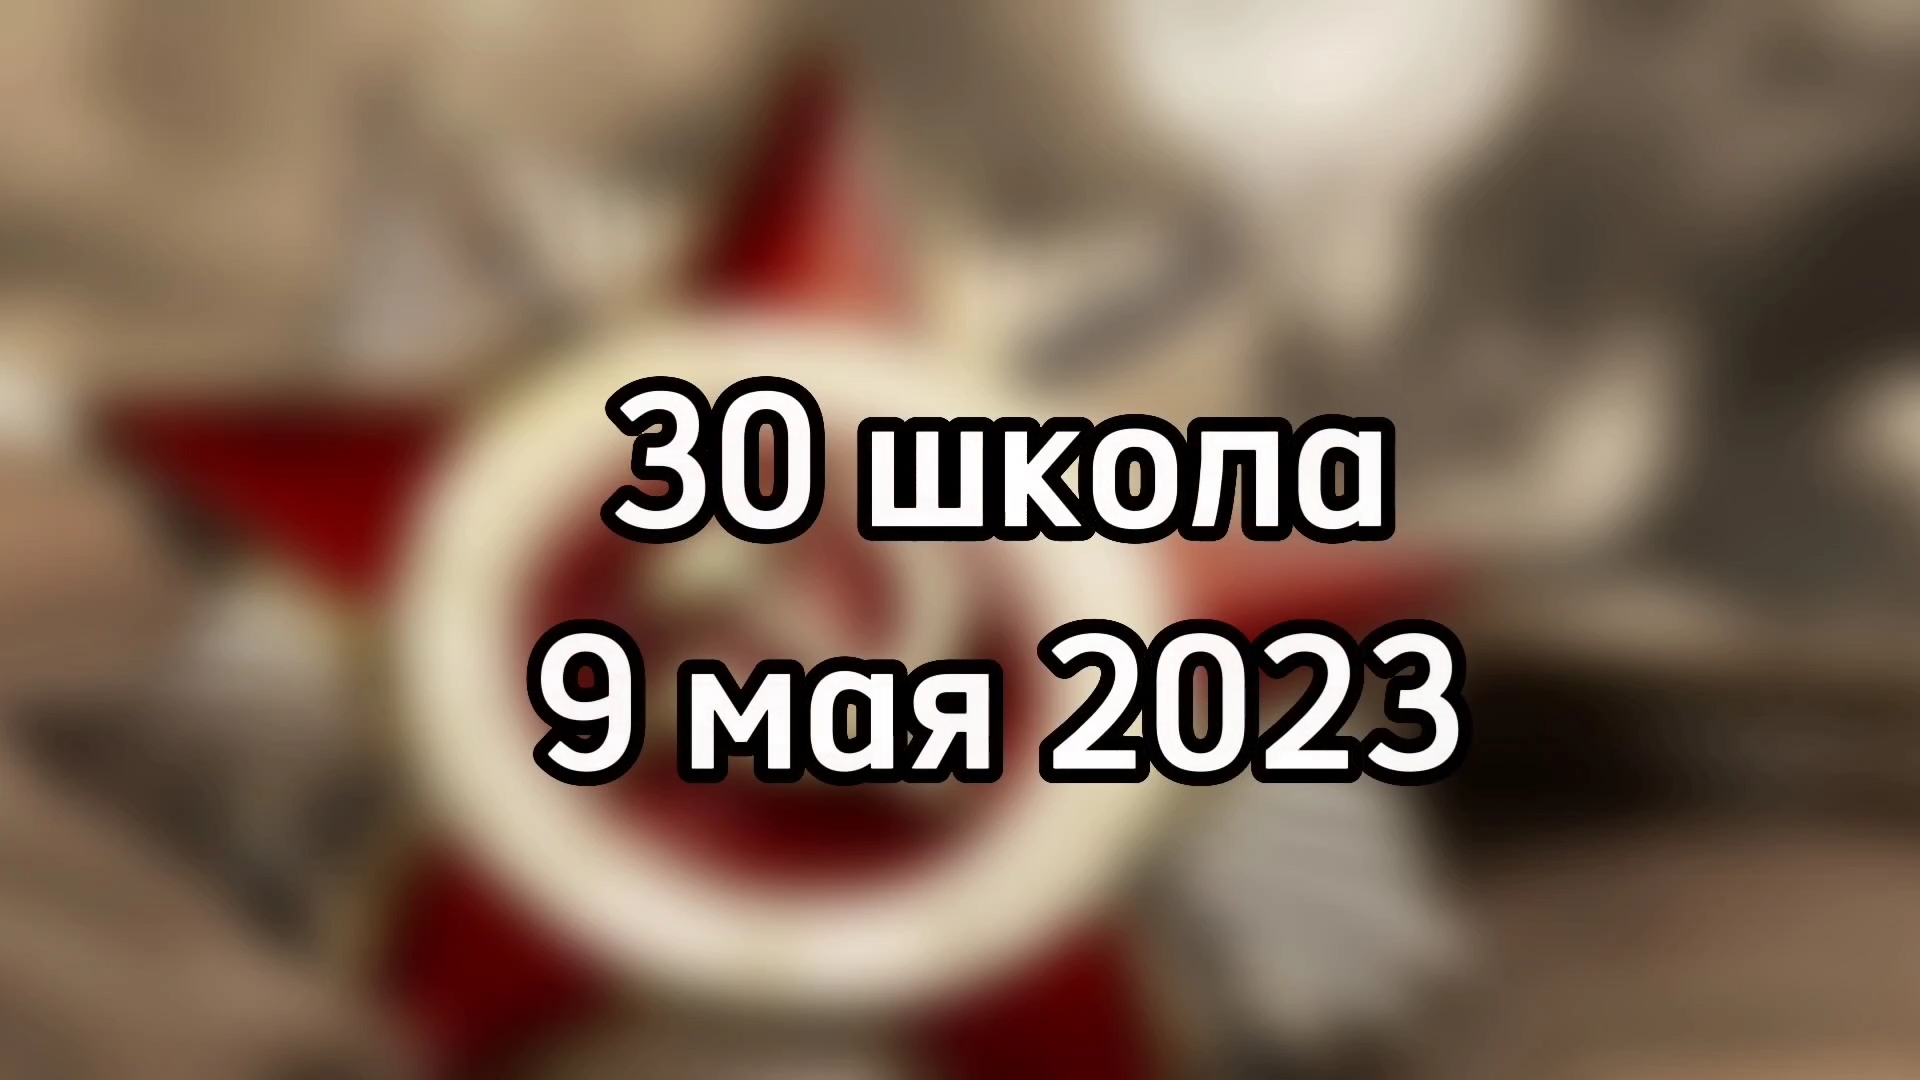 9 Мая 2023